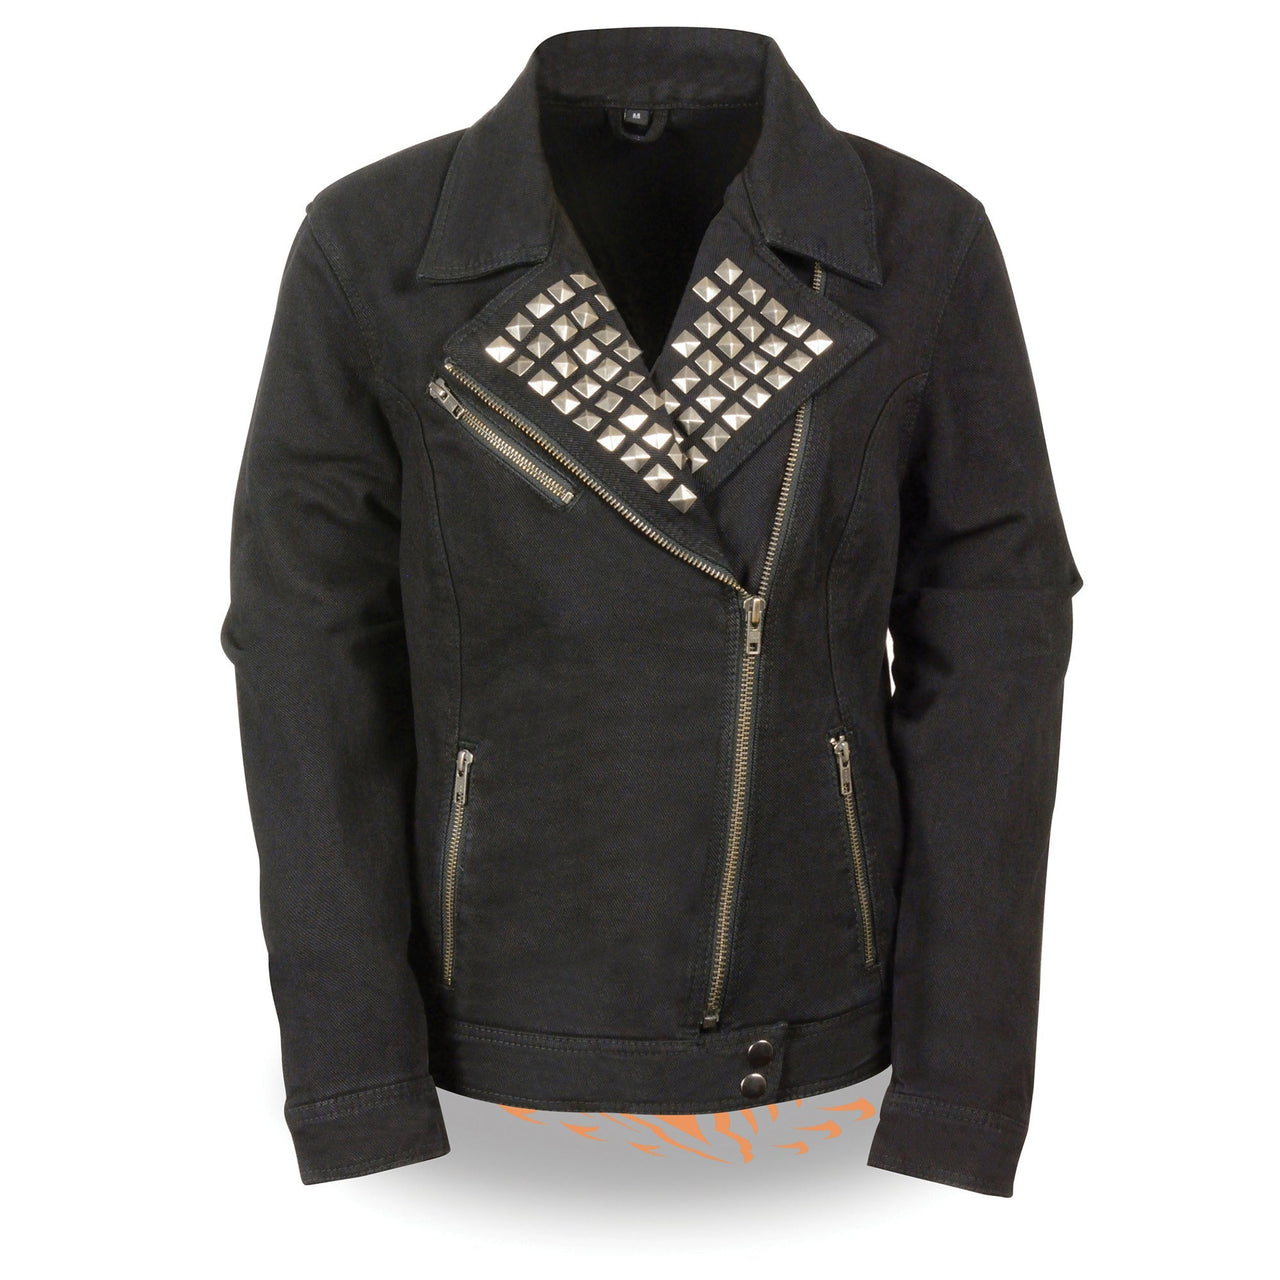 Ladies Zipper Front Black Denim Jacket w/ Studded Spikes - HighwayLeather